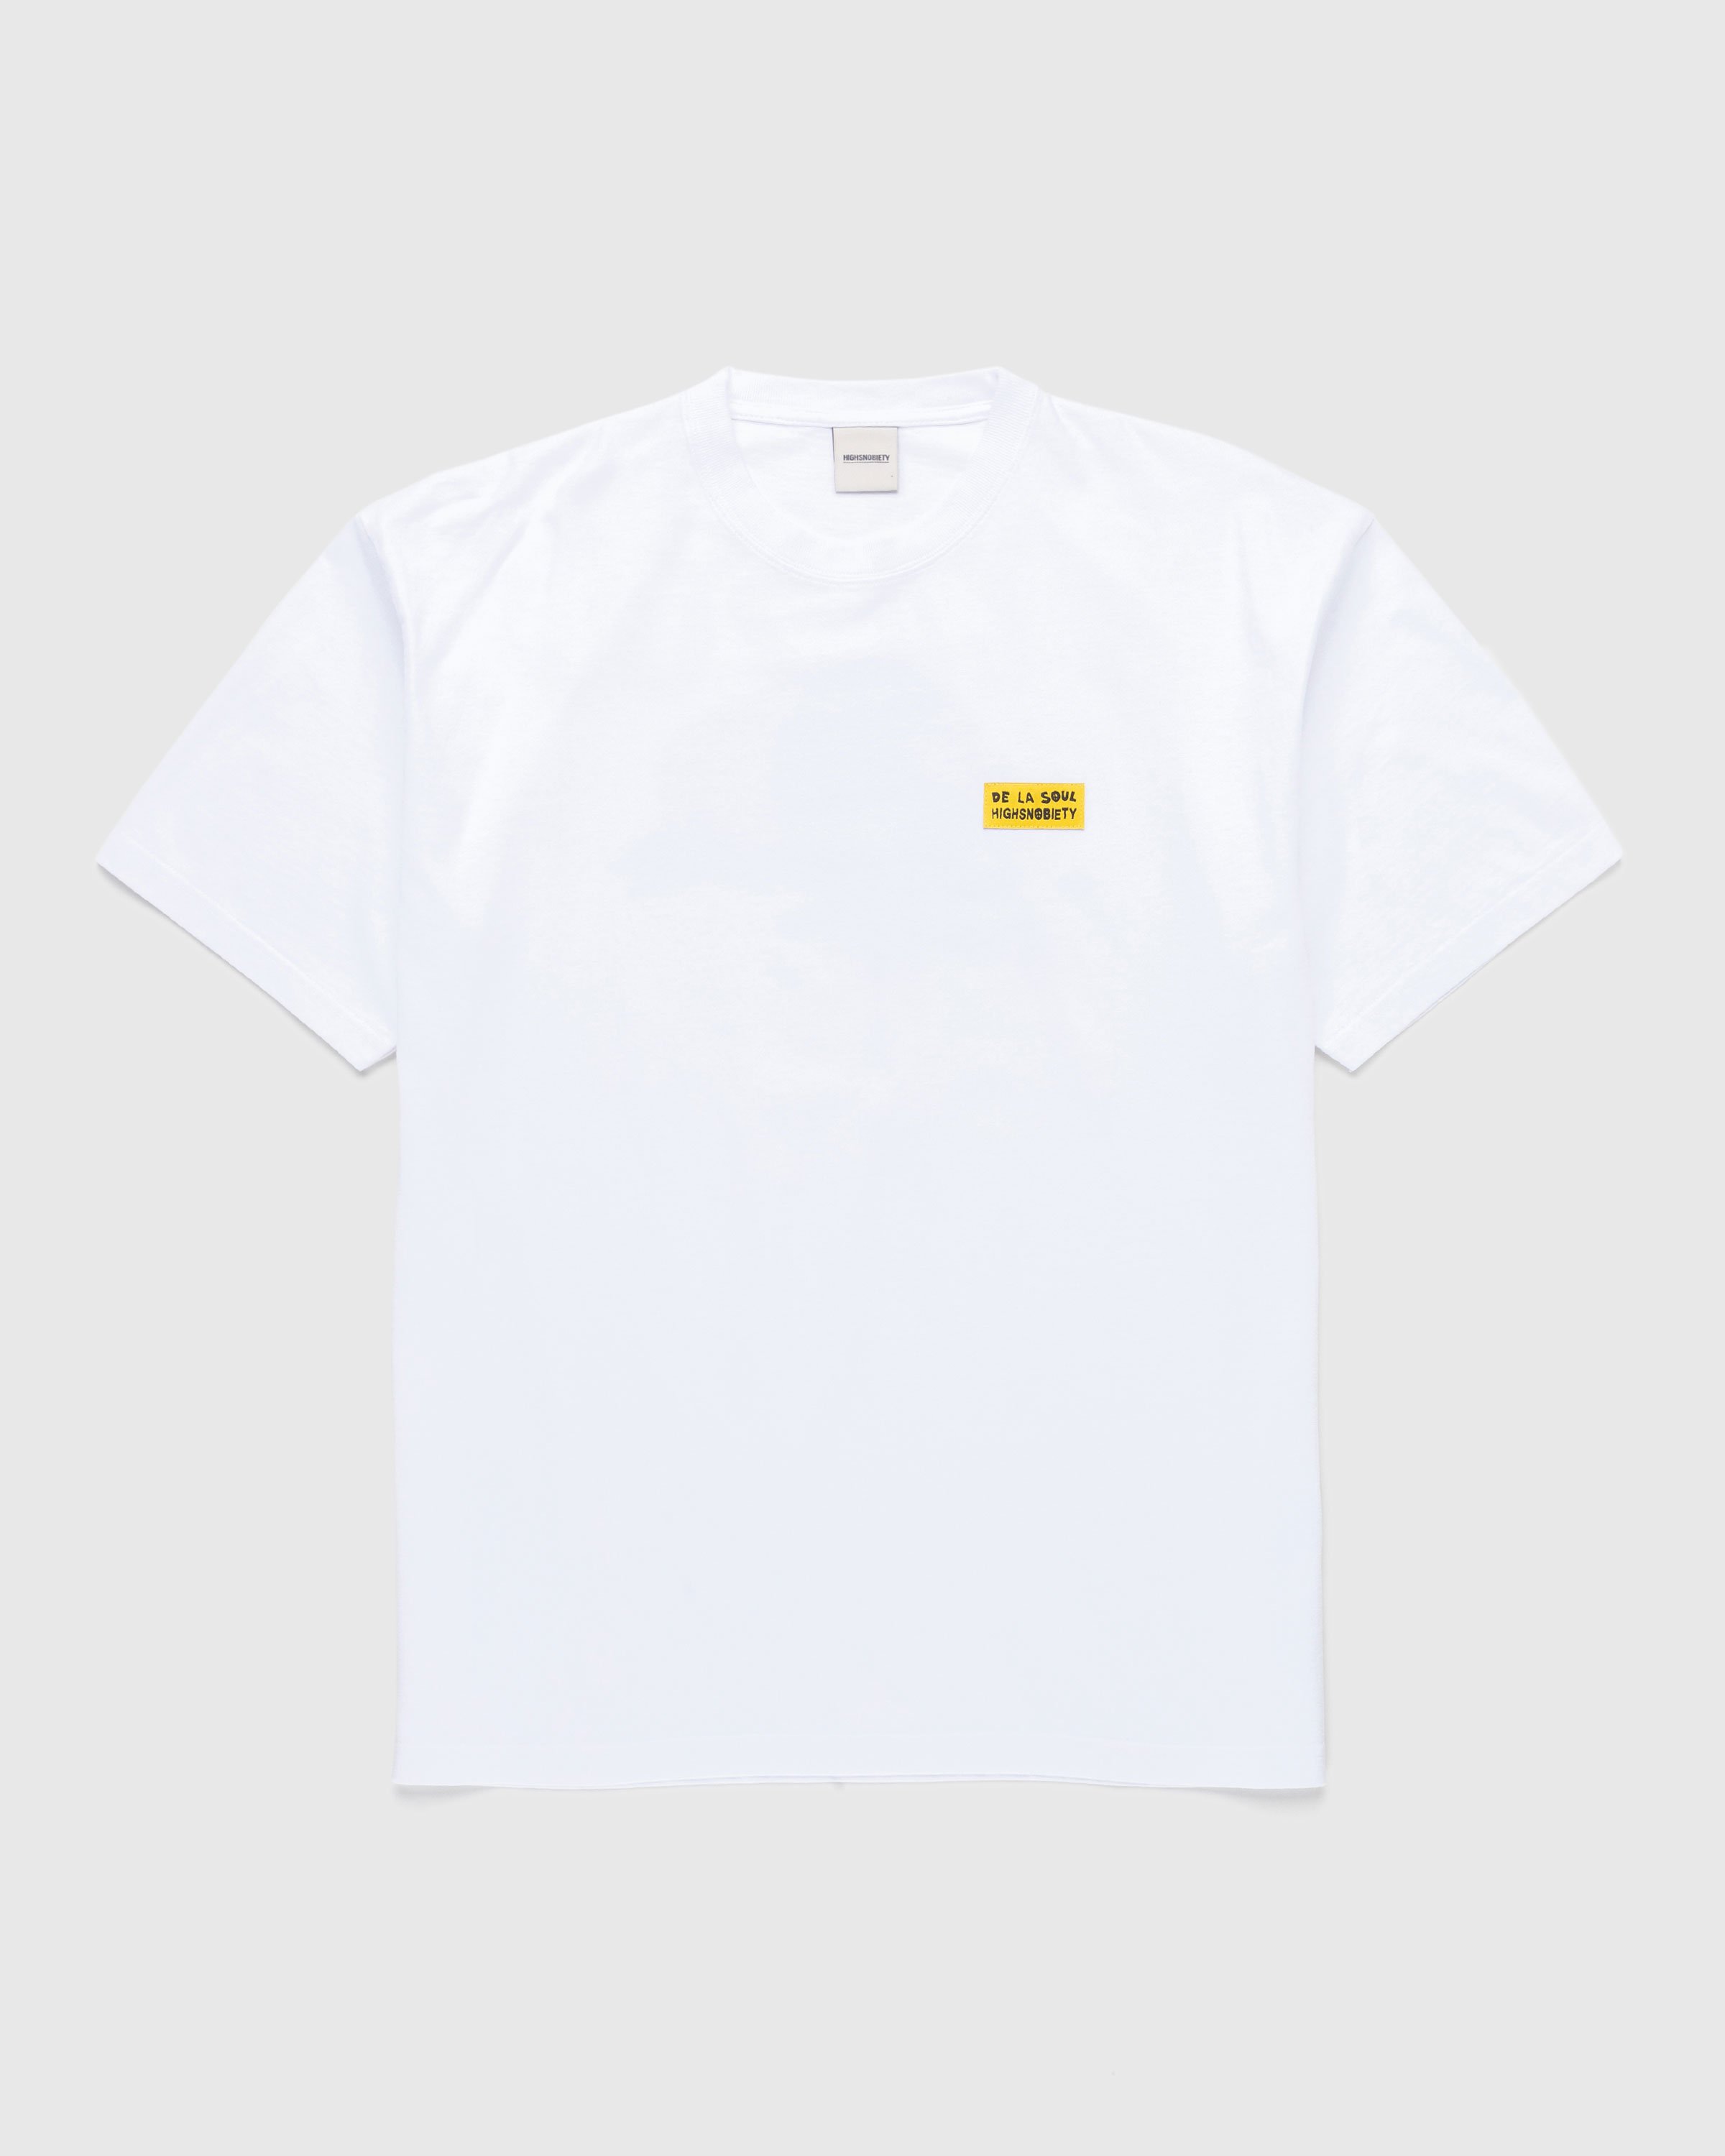 Highsnobiety x De La Soul - White T-Shirt - Clothing - White - Image 2